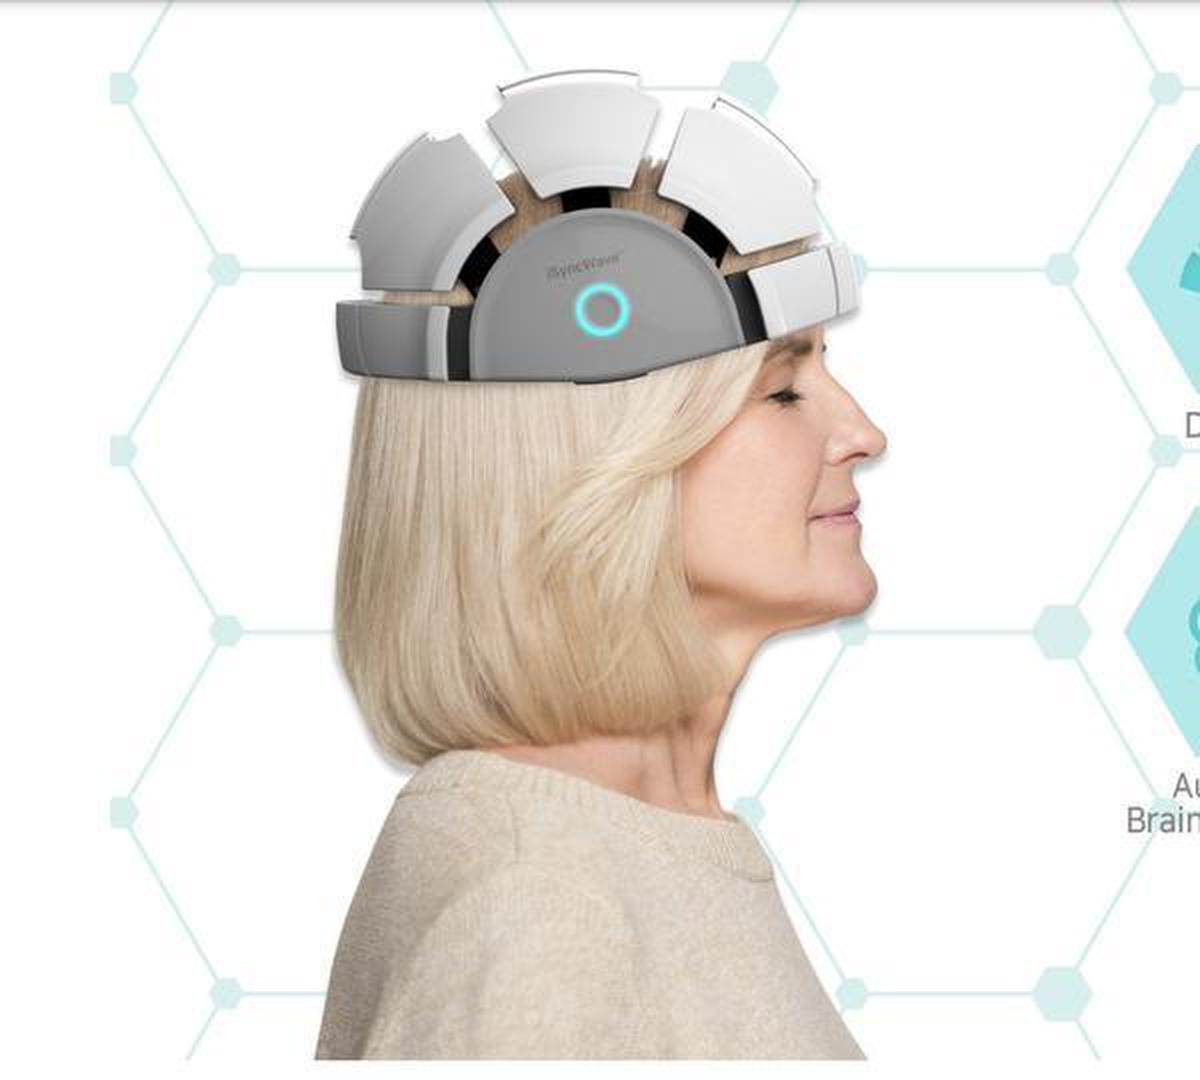 Helmets to predict Alzheimer’s, a stress-canceller, an app to track seizures : Health tech at CES 2021